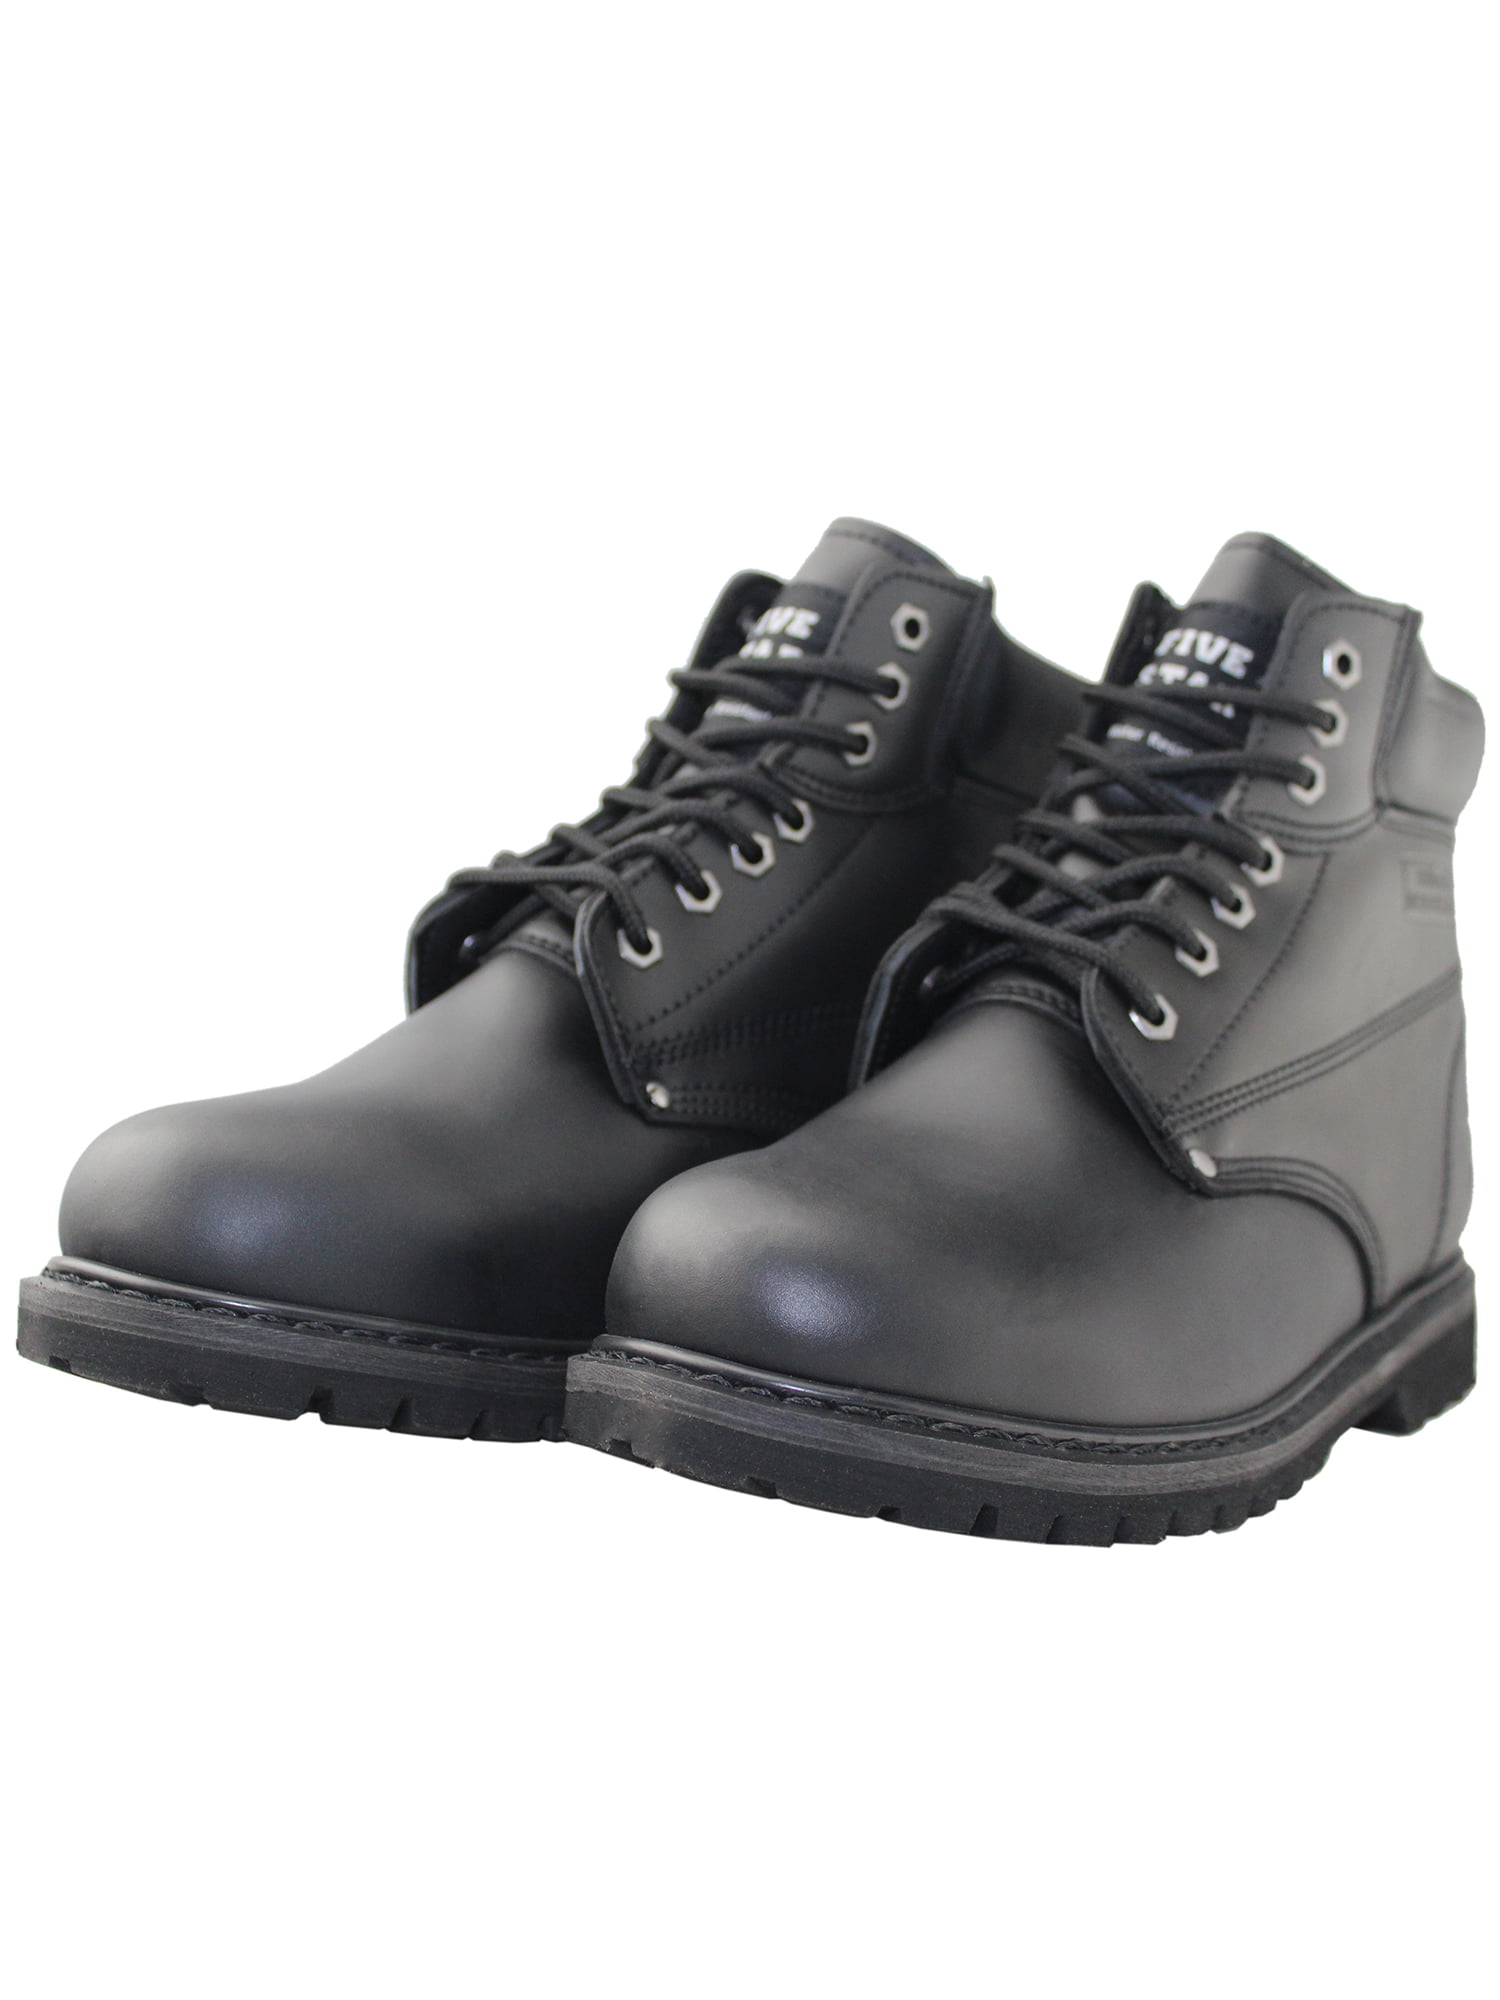 mens black waterproof chukka boots